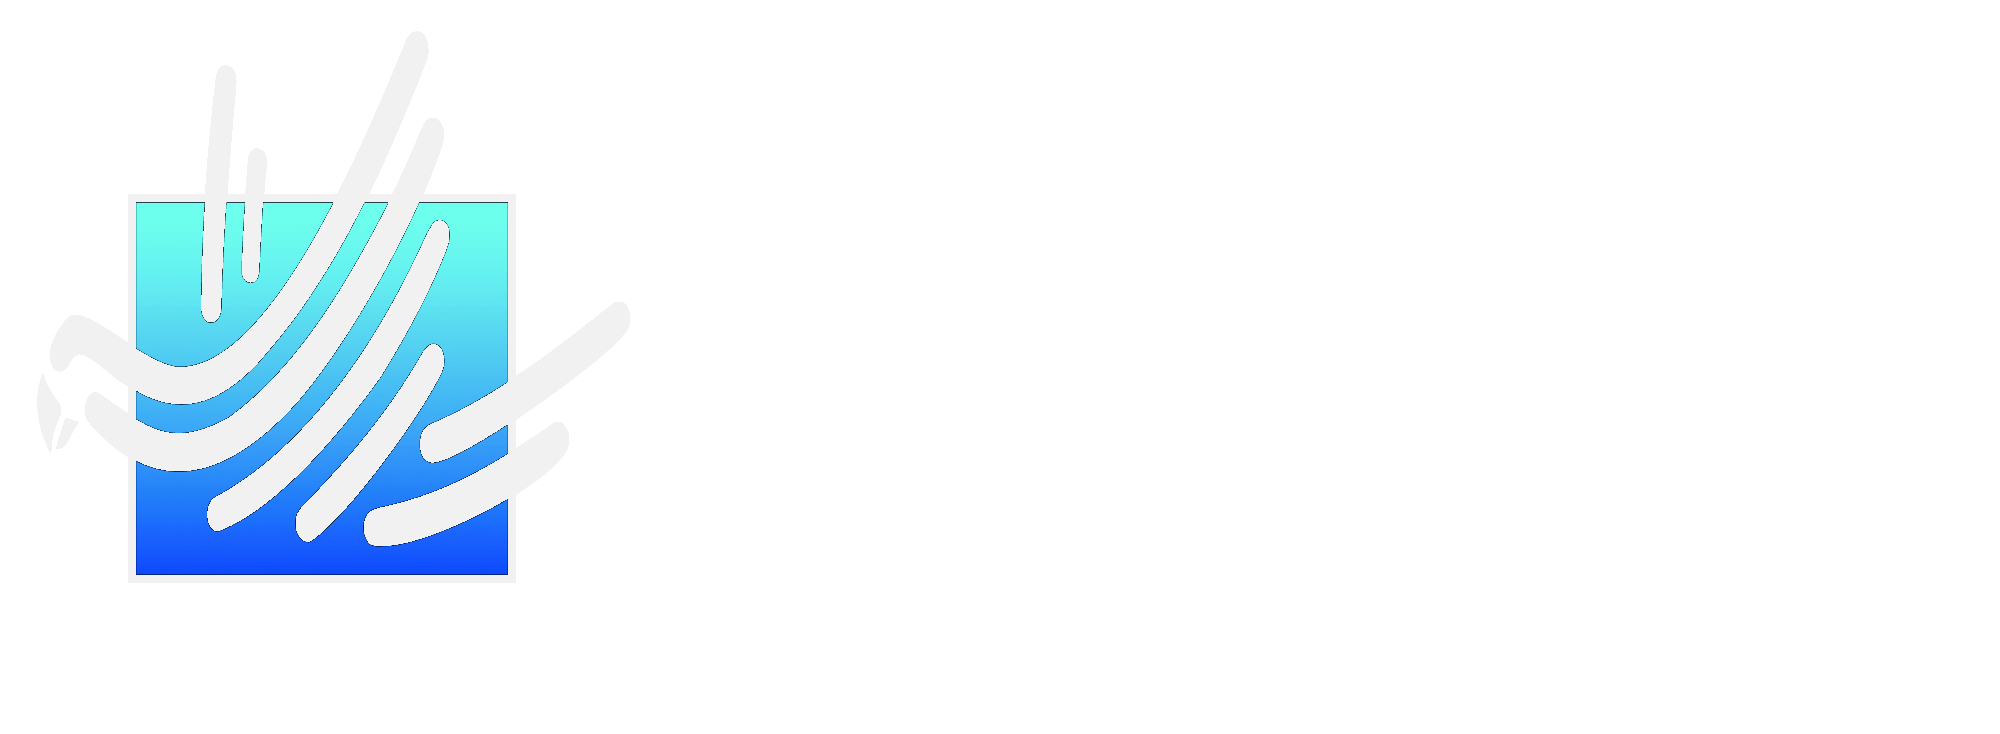 Harrison's Bird Foods - UK